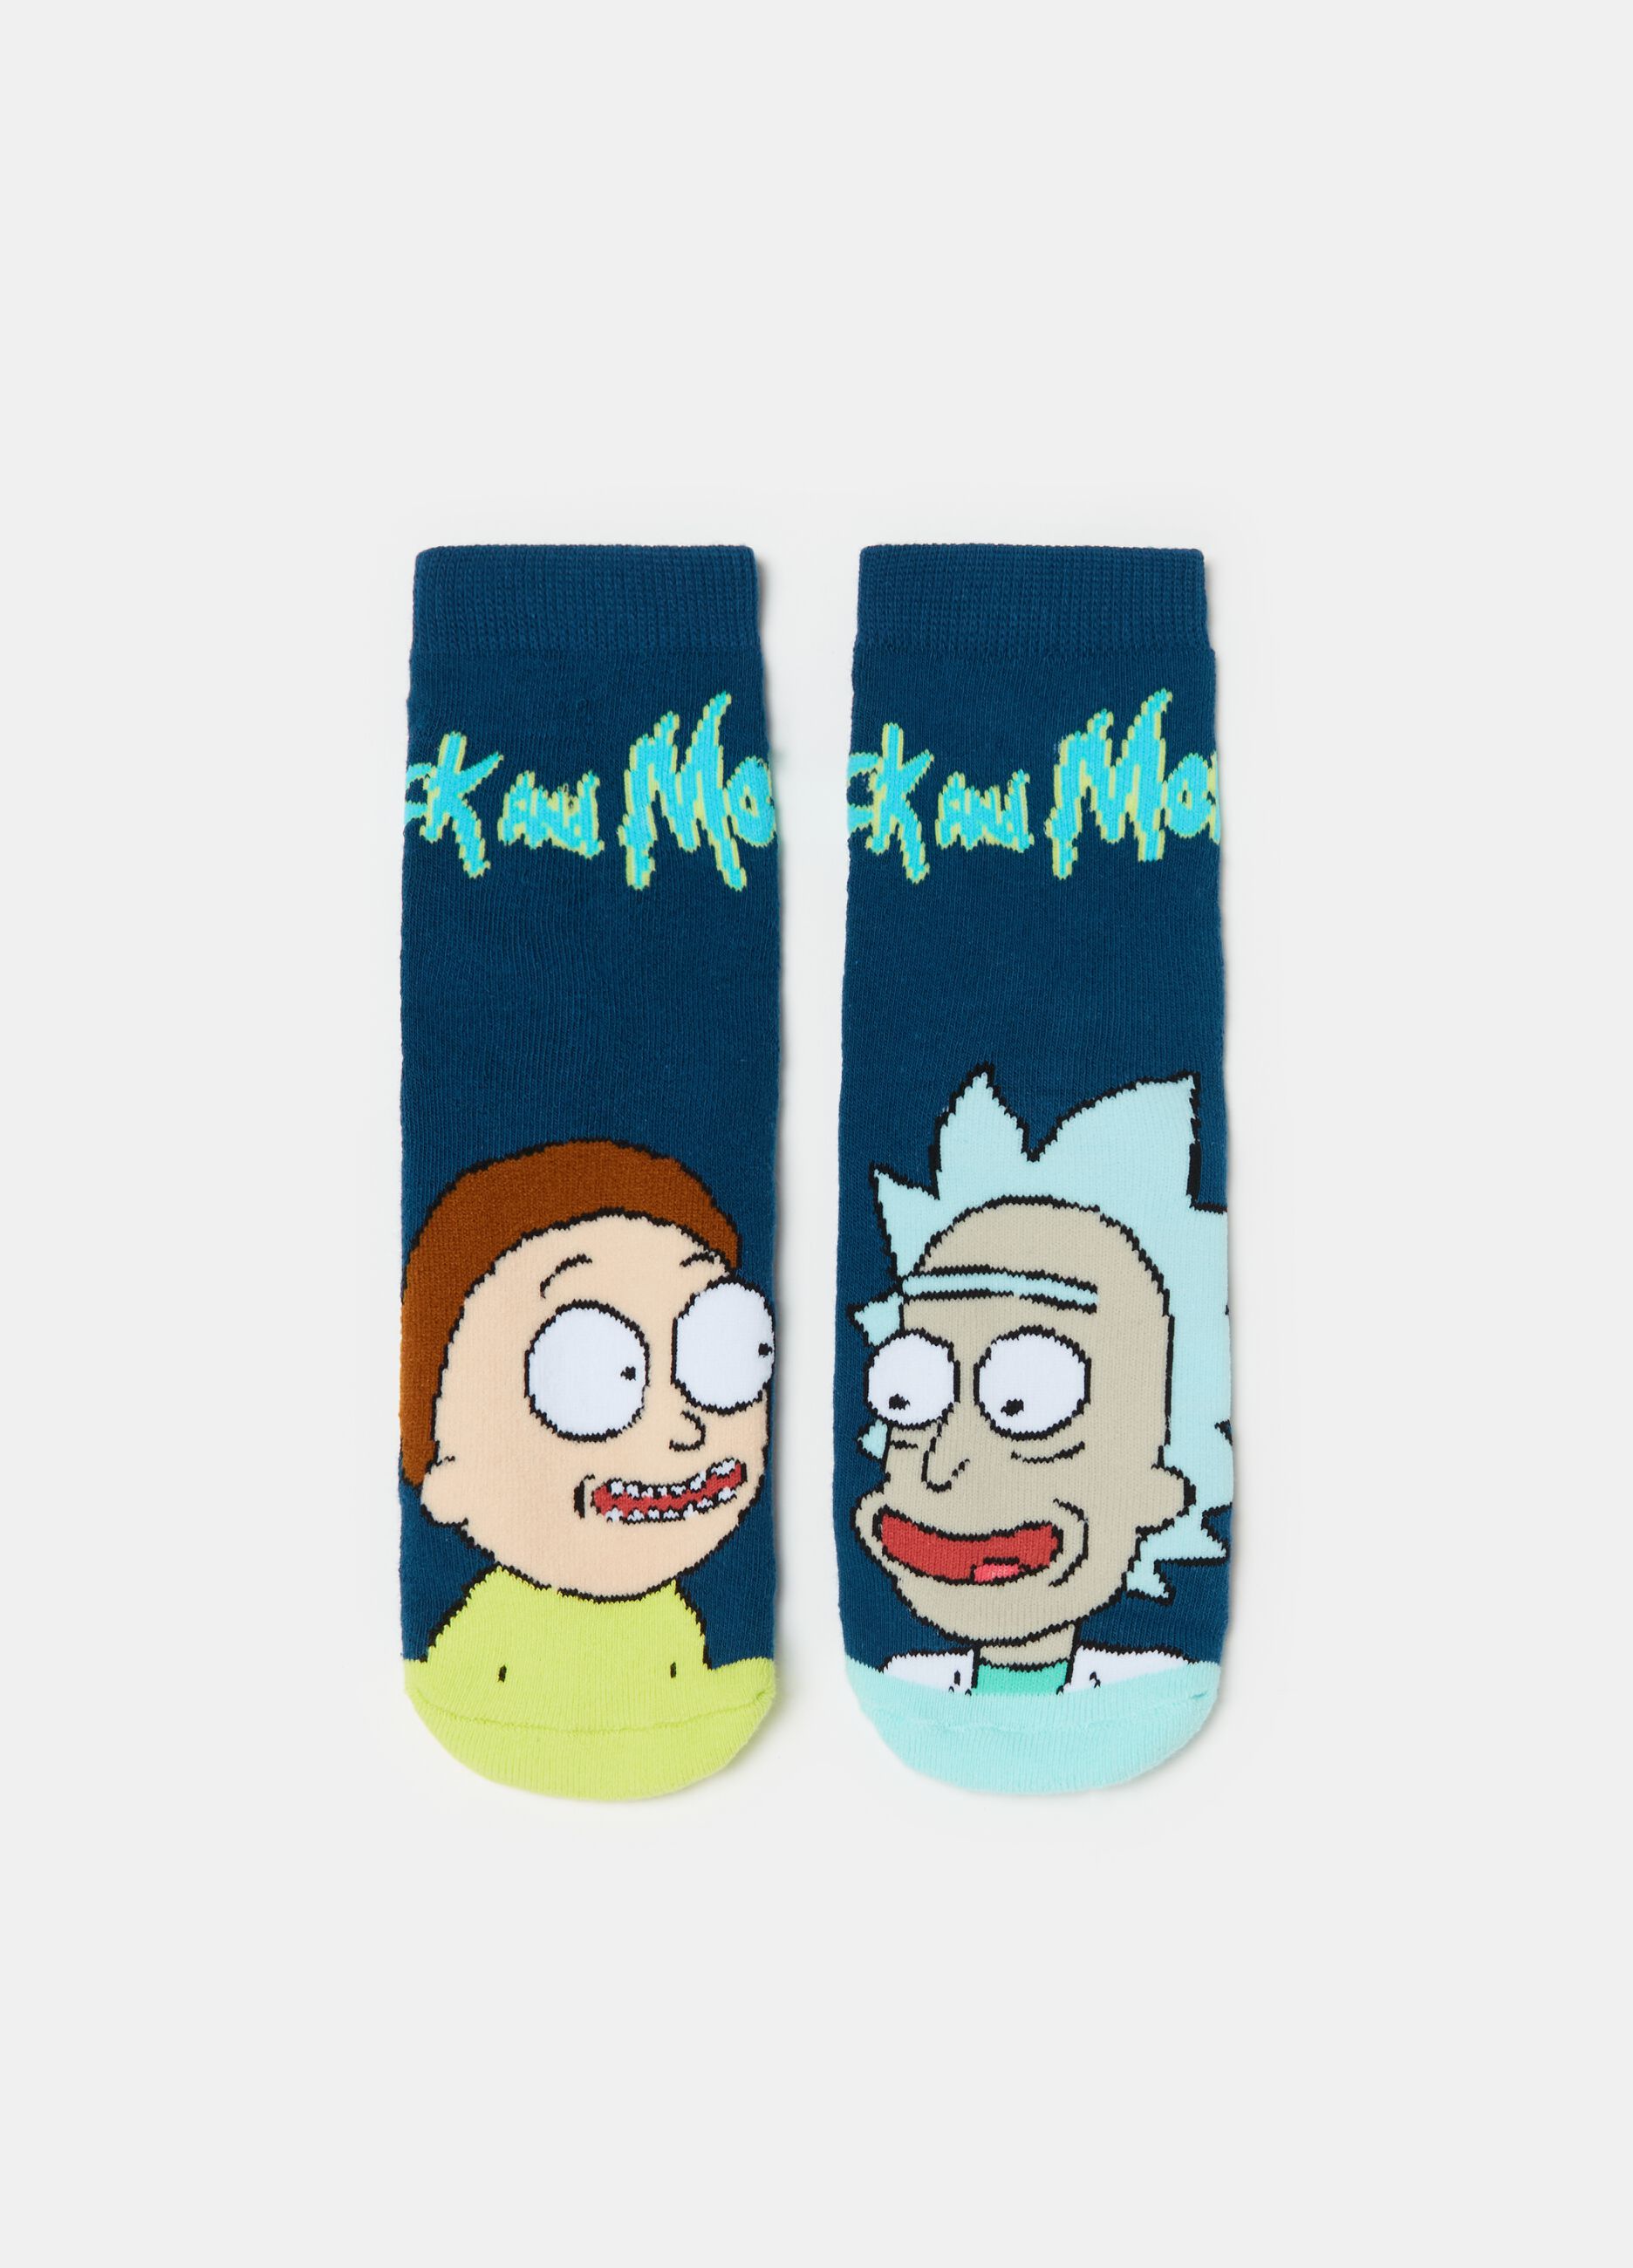 Calze antiscivolo con disegno Rick e Morty